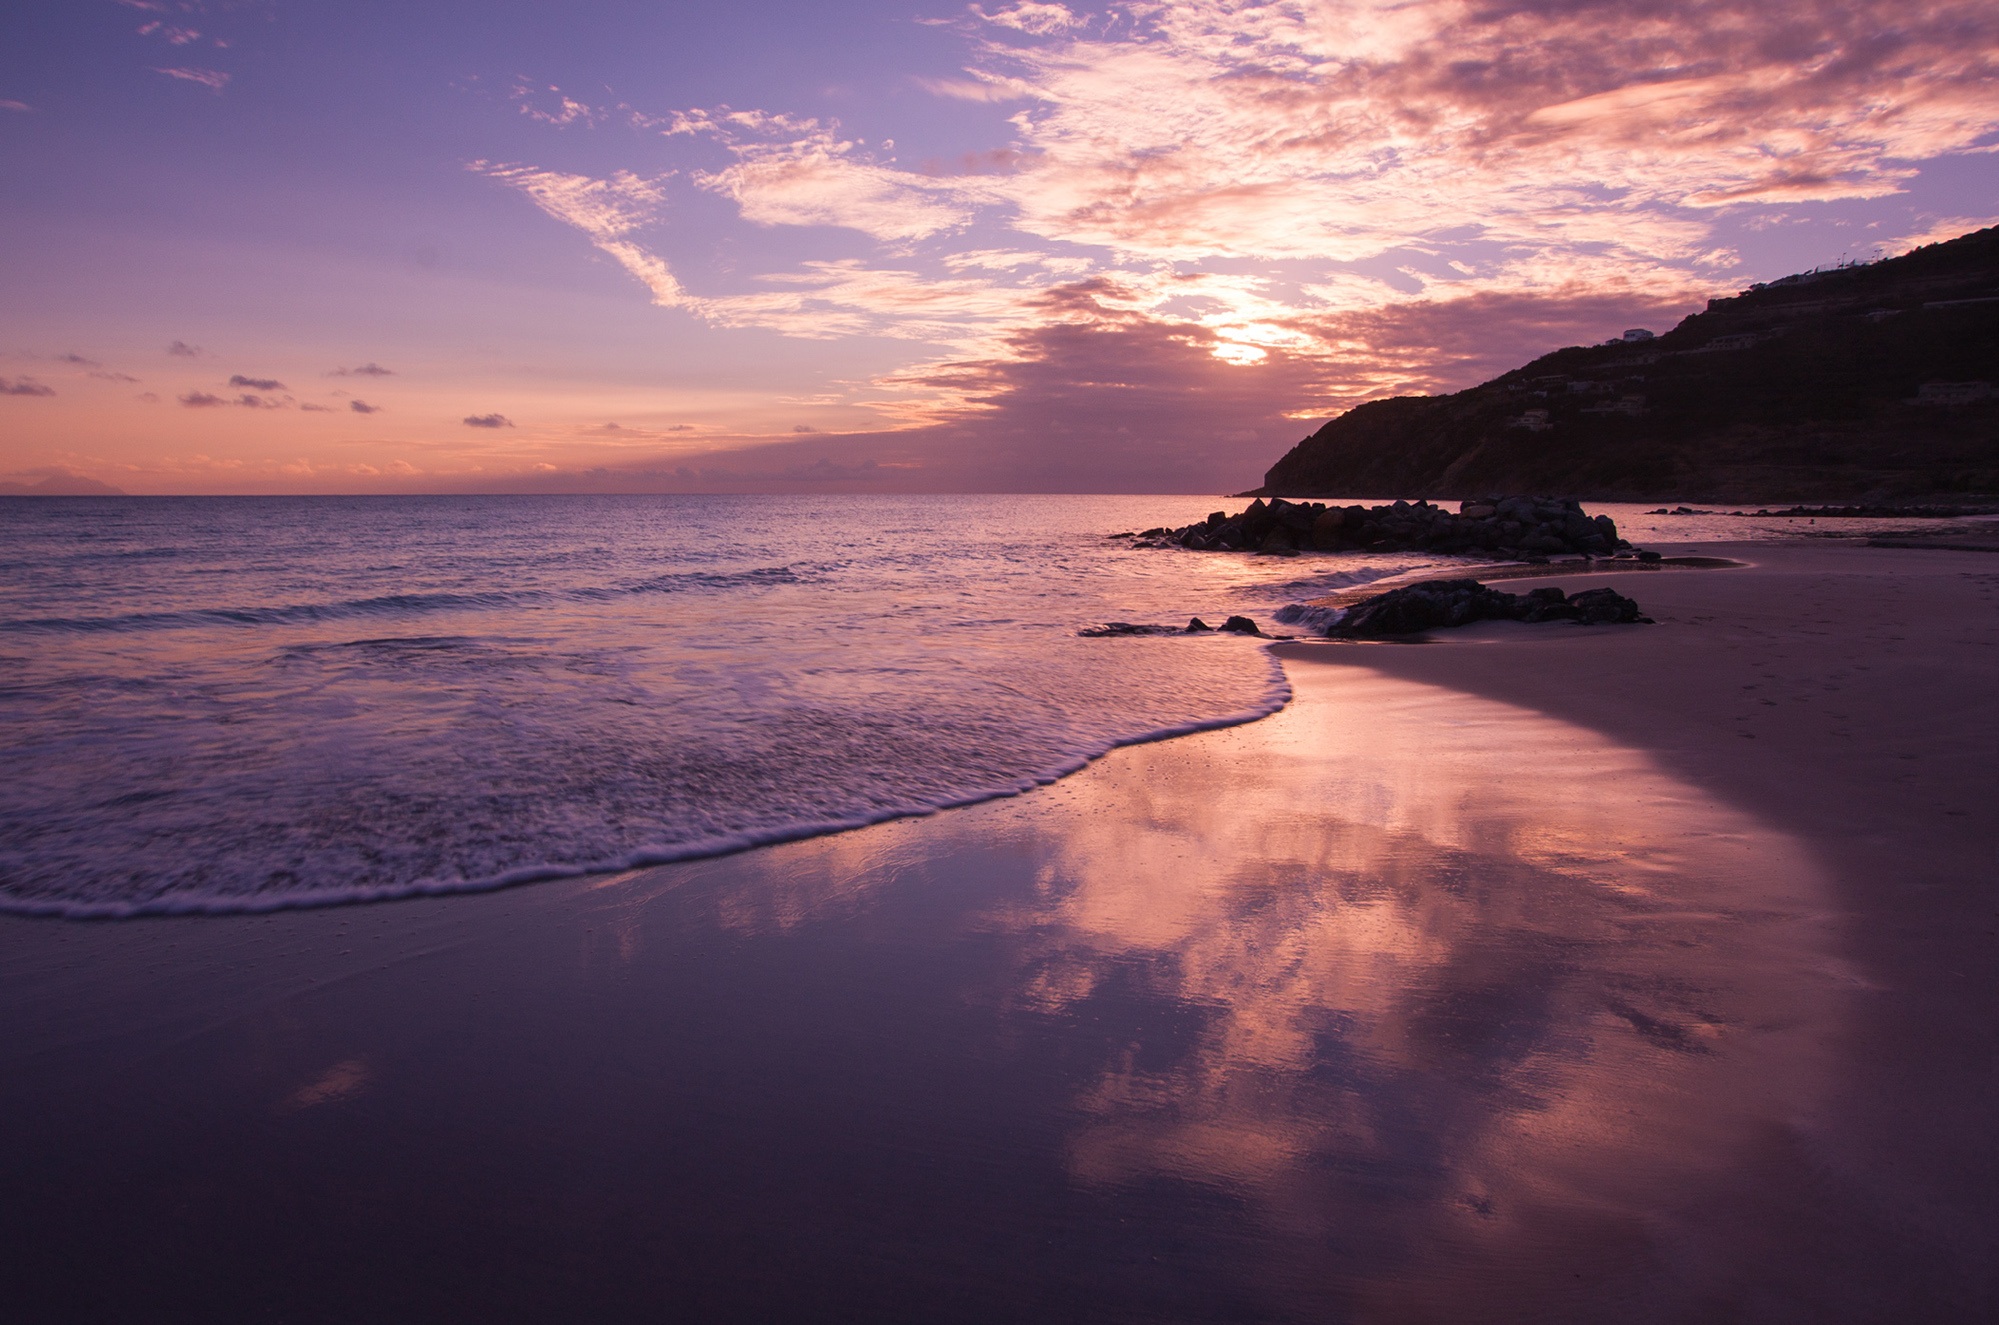 Morning sunrise on the sandy beach of the sea